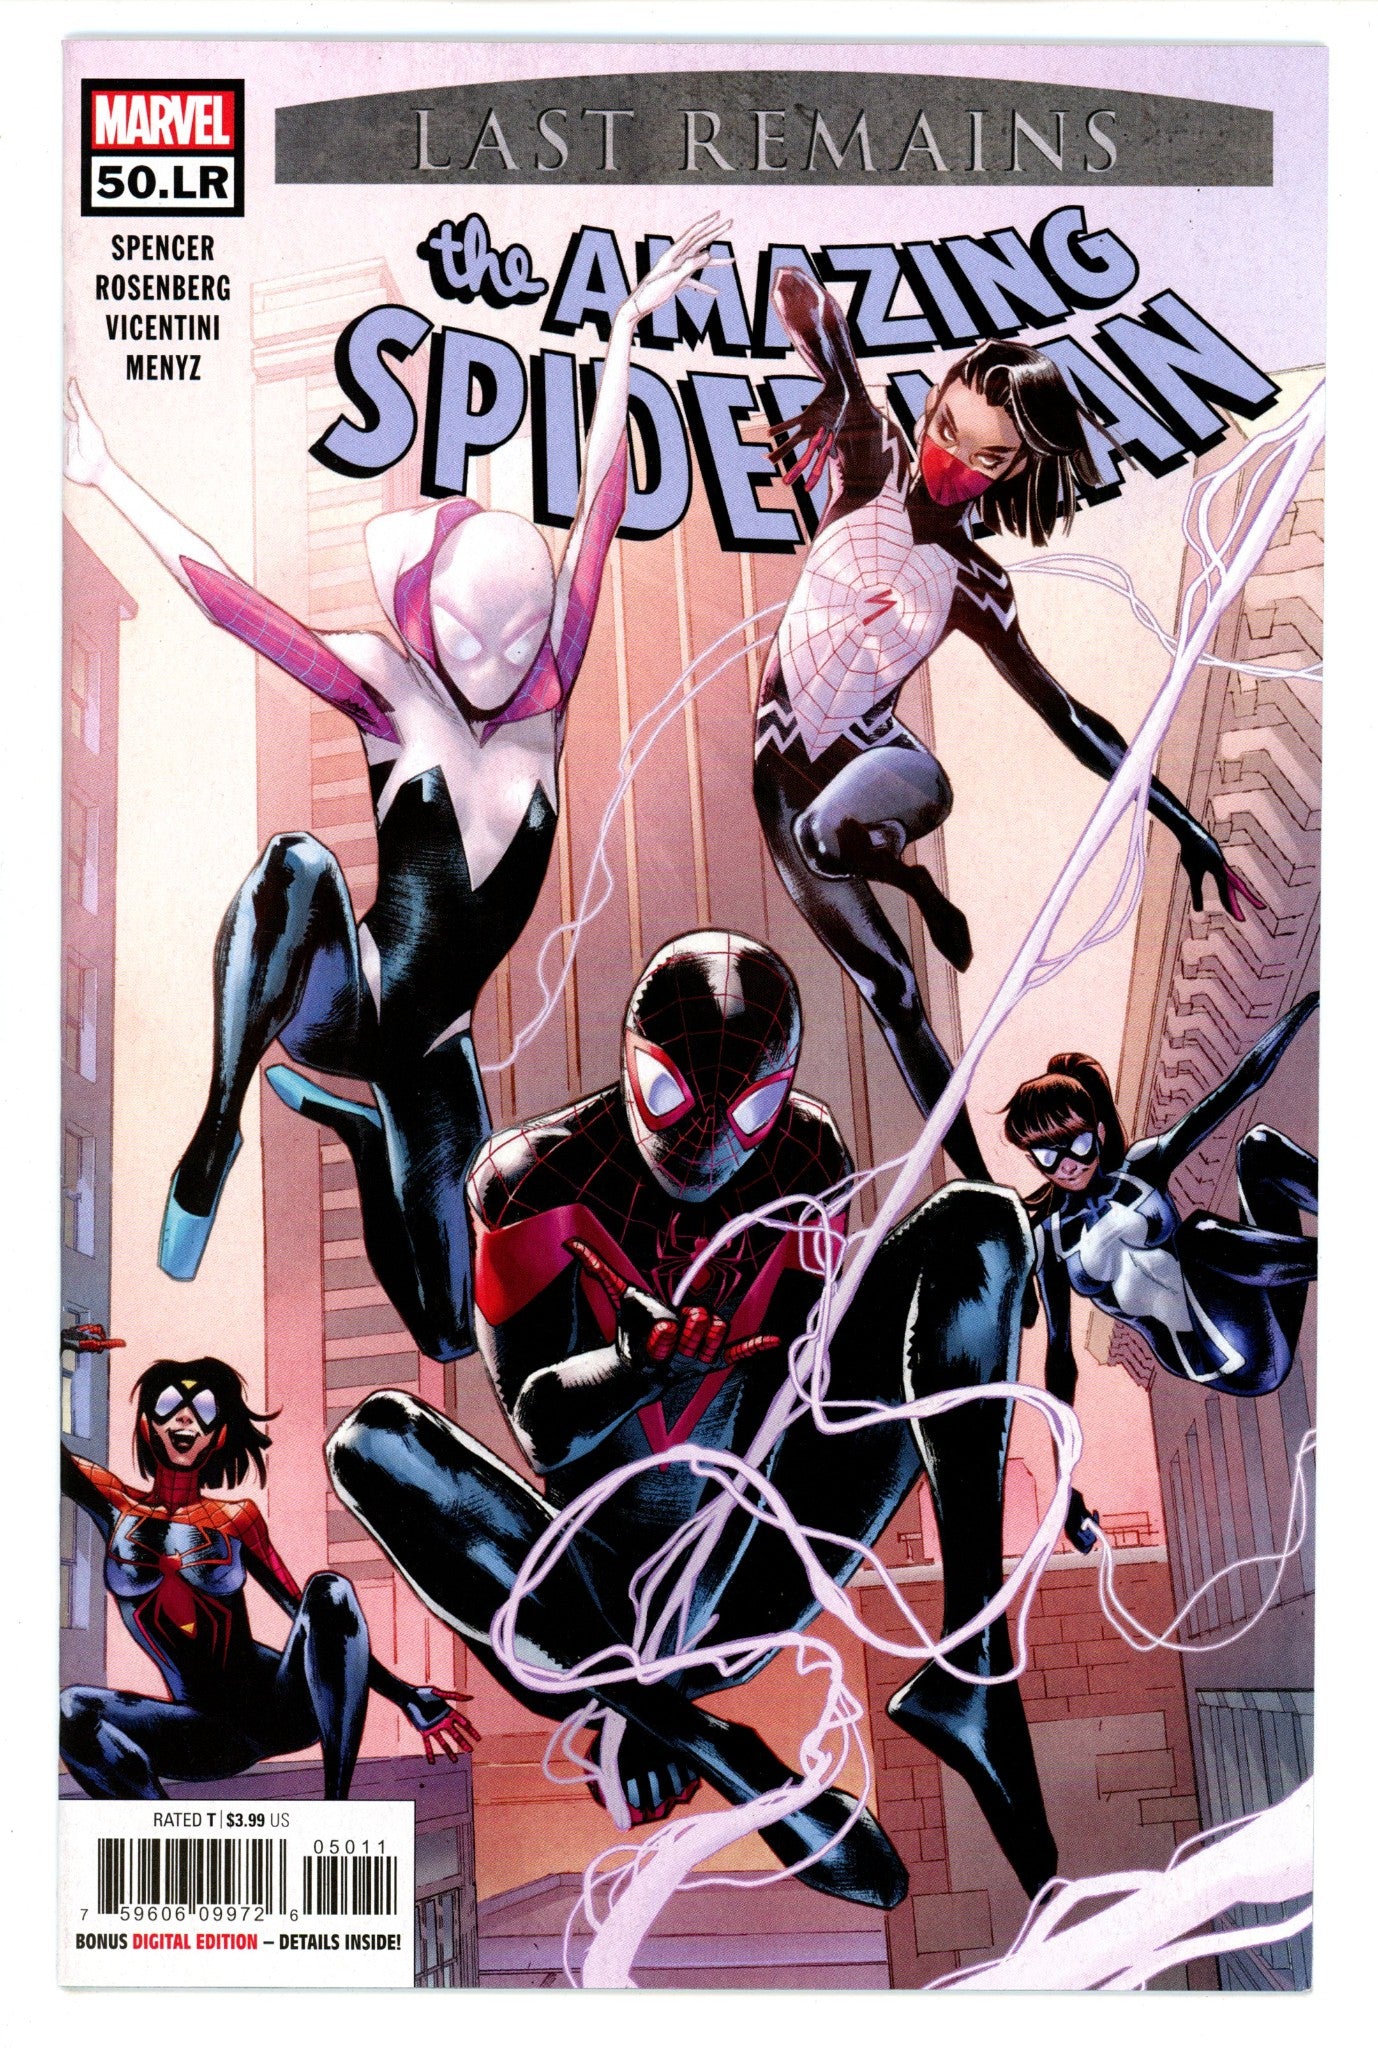 Amazing Spider-Man Vol 5 50.LRHigh Grade(2020)